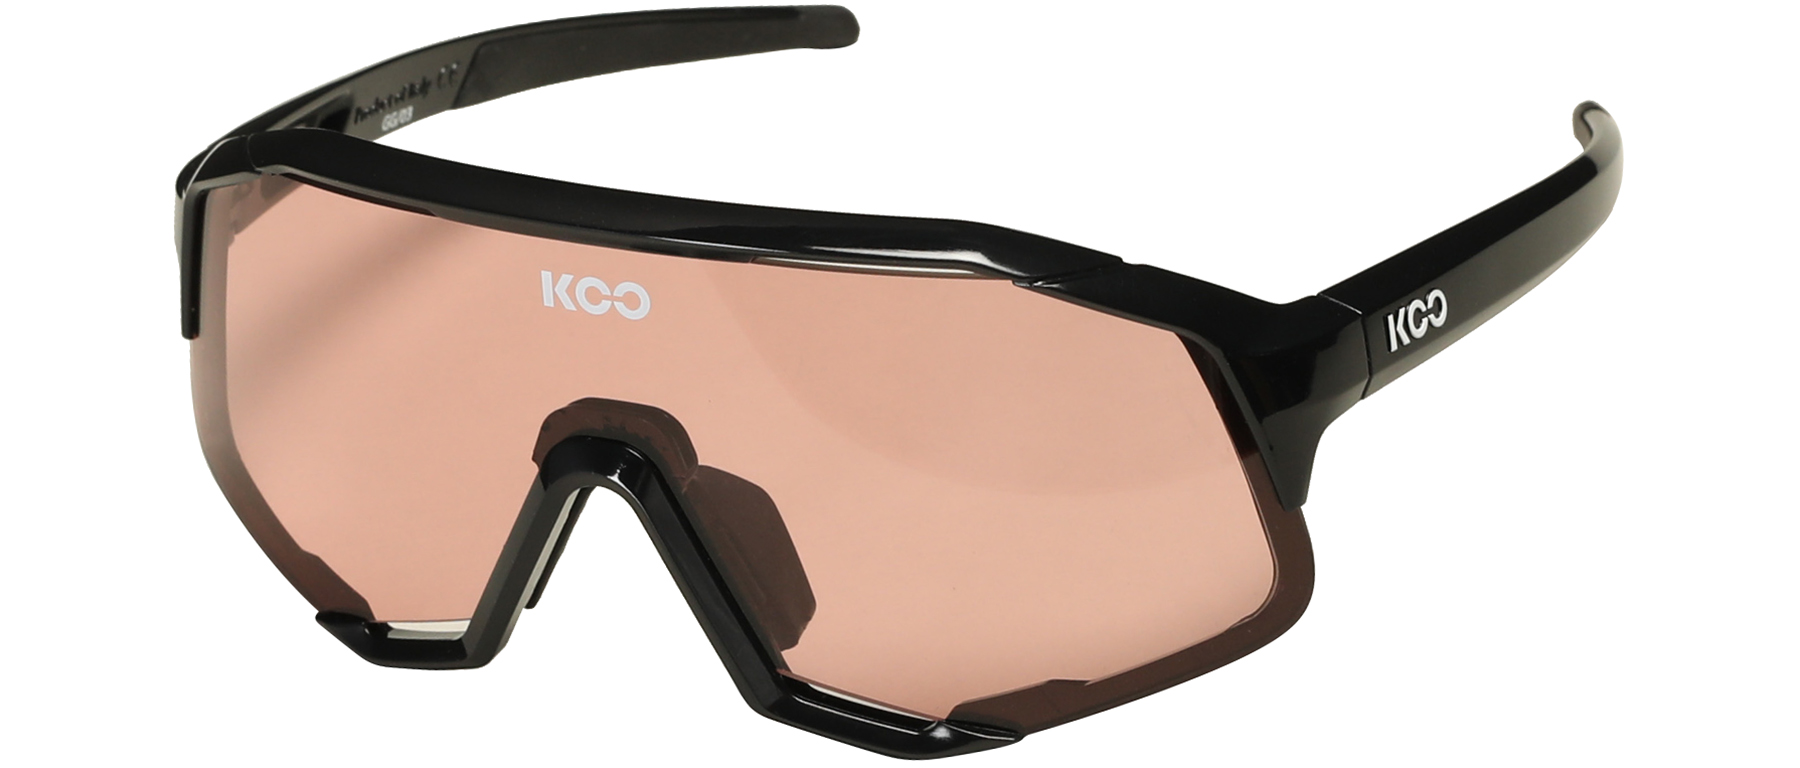 KASK Koo Demos Eyewear